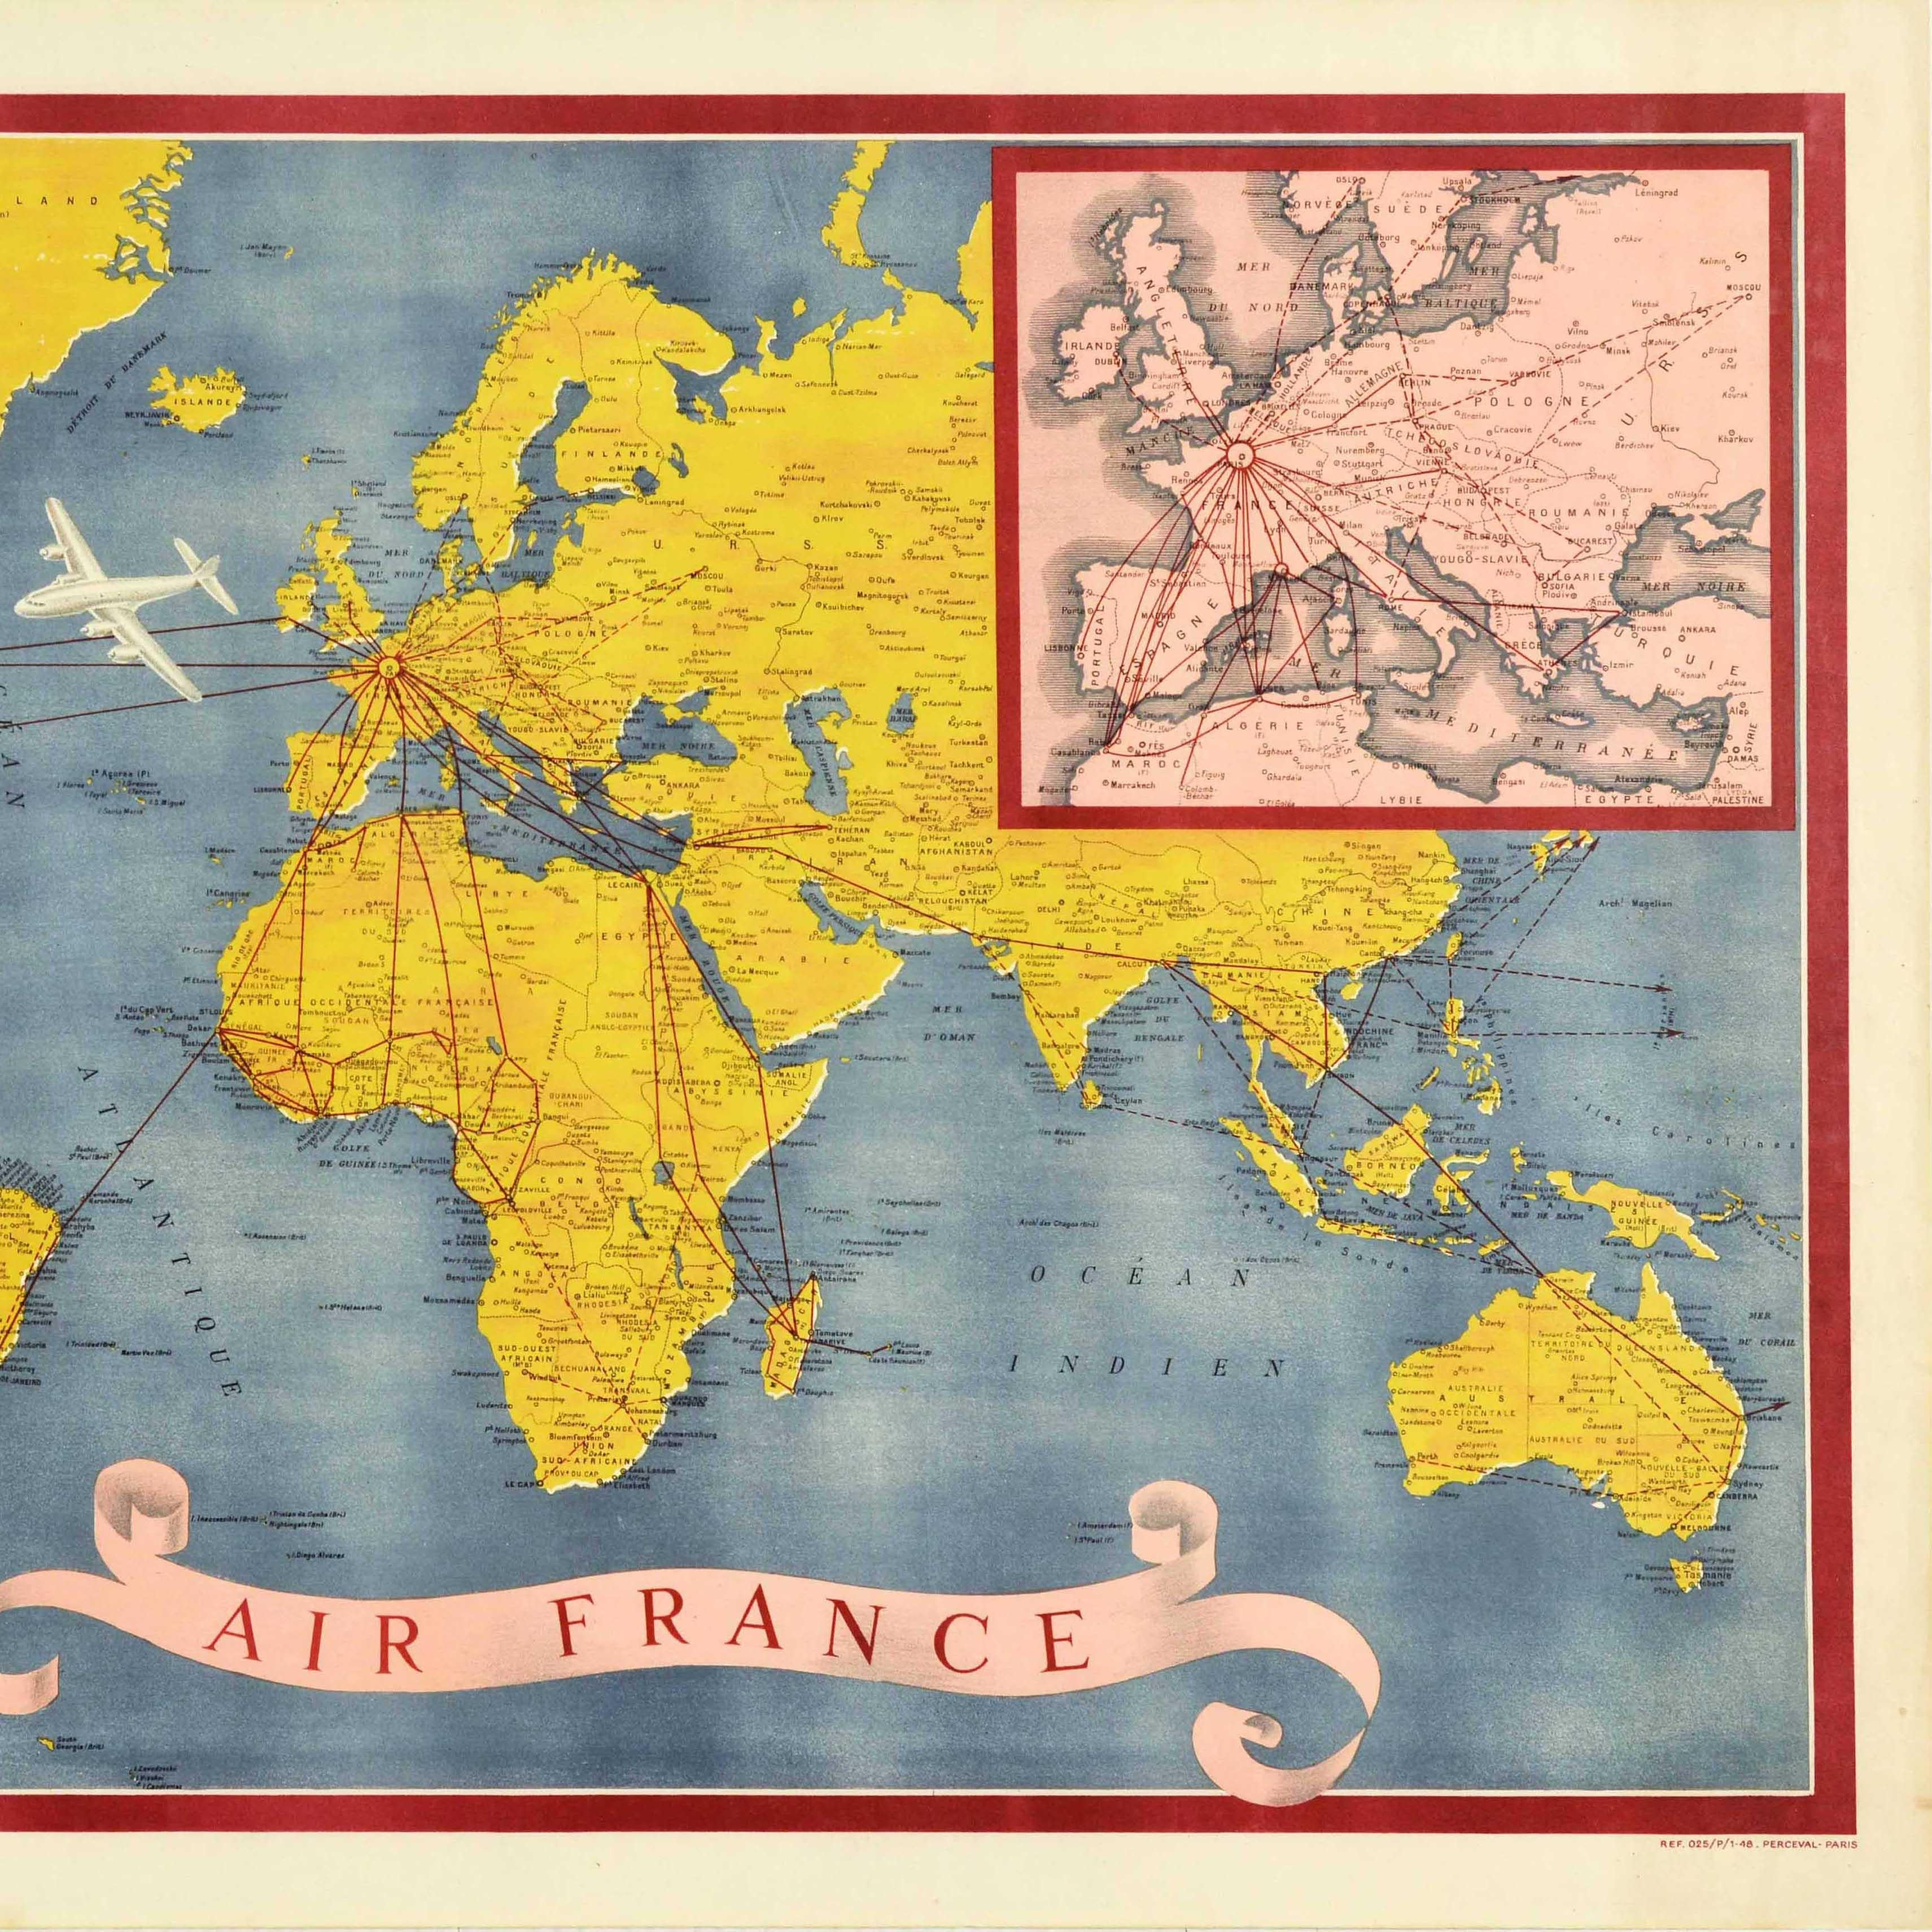 French Original Vintage Travel Poster Air France World Map Postal Network Reseau Aerian For Sale